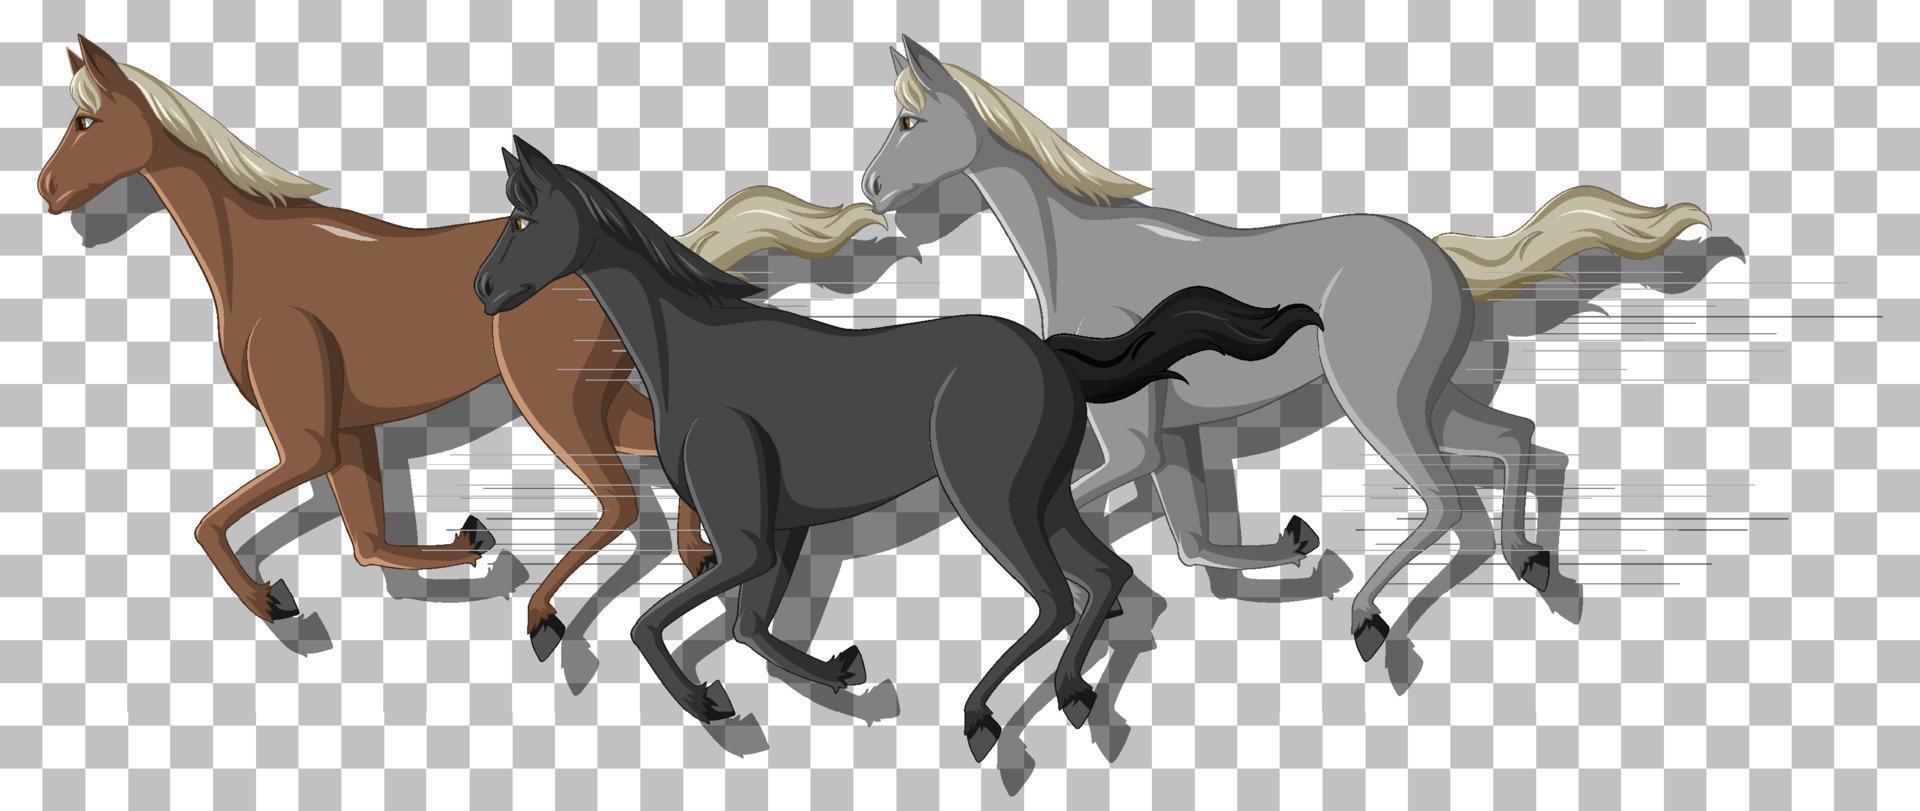 Three horses running on grid background vector